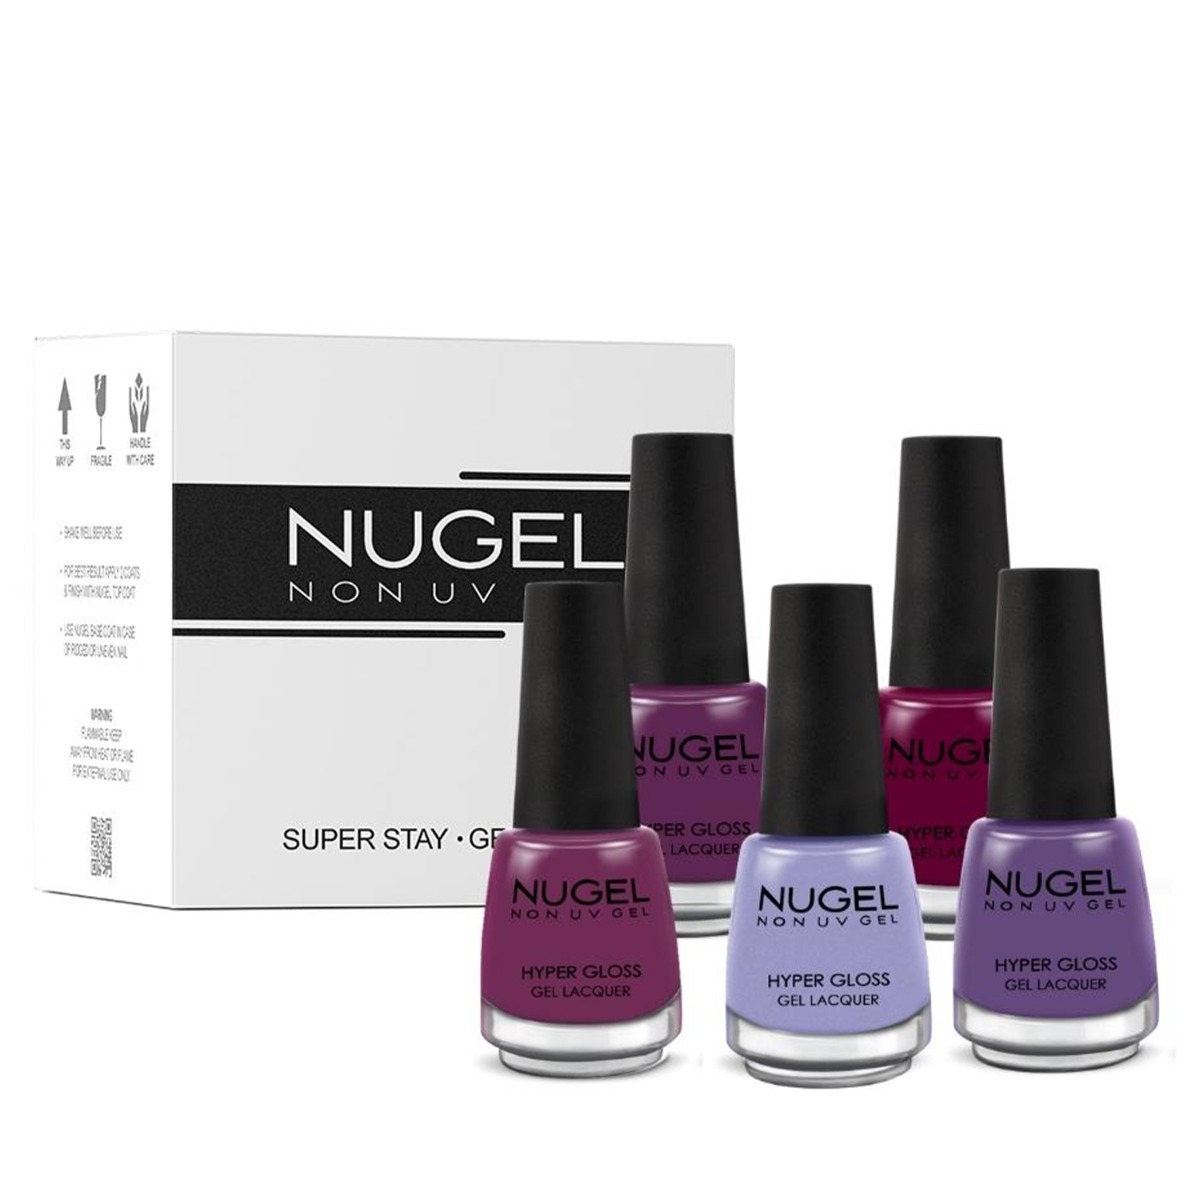 NUGEL 5 In 1 Combo 28 Quick Dry Gel Finish Nail Paint - Duotone, Nail Kit, 65ml